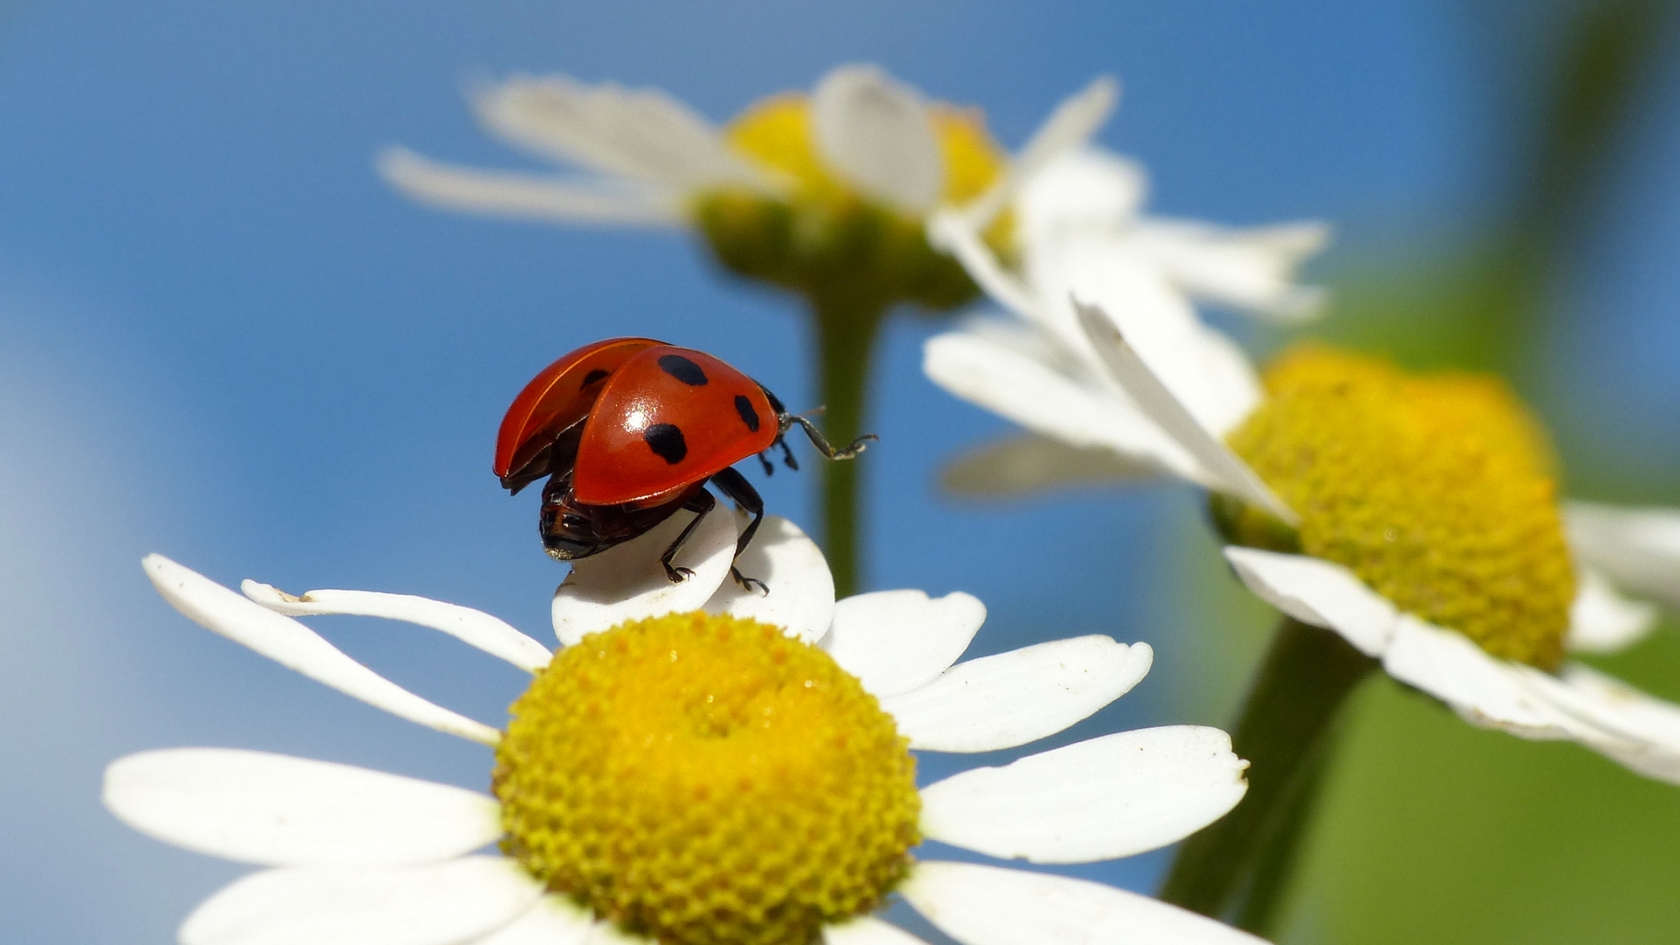 Ladybug on a Chamomile Flower for 1680 x 945 HDTV resolution